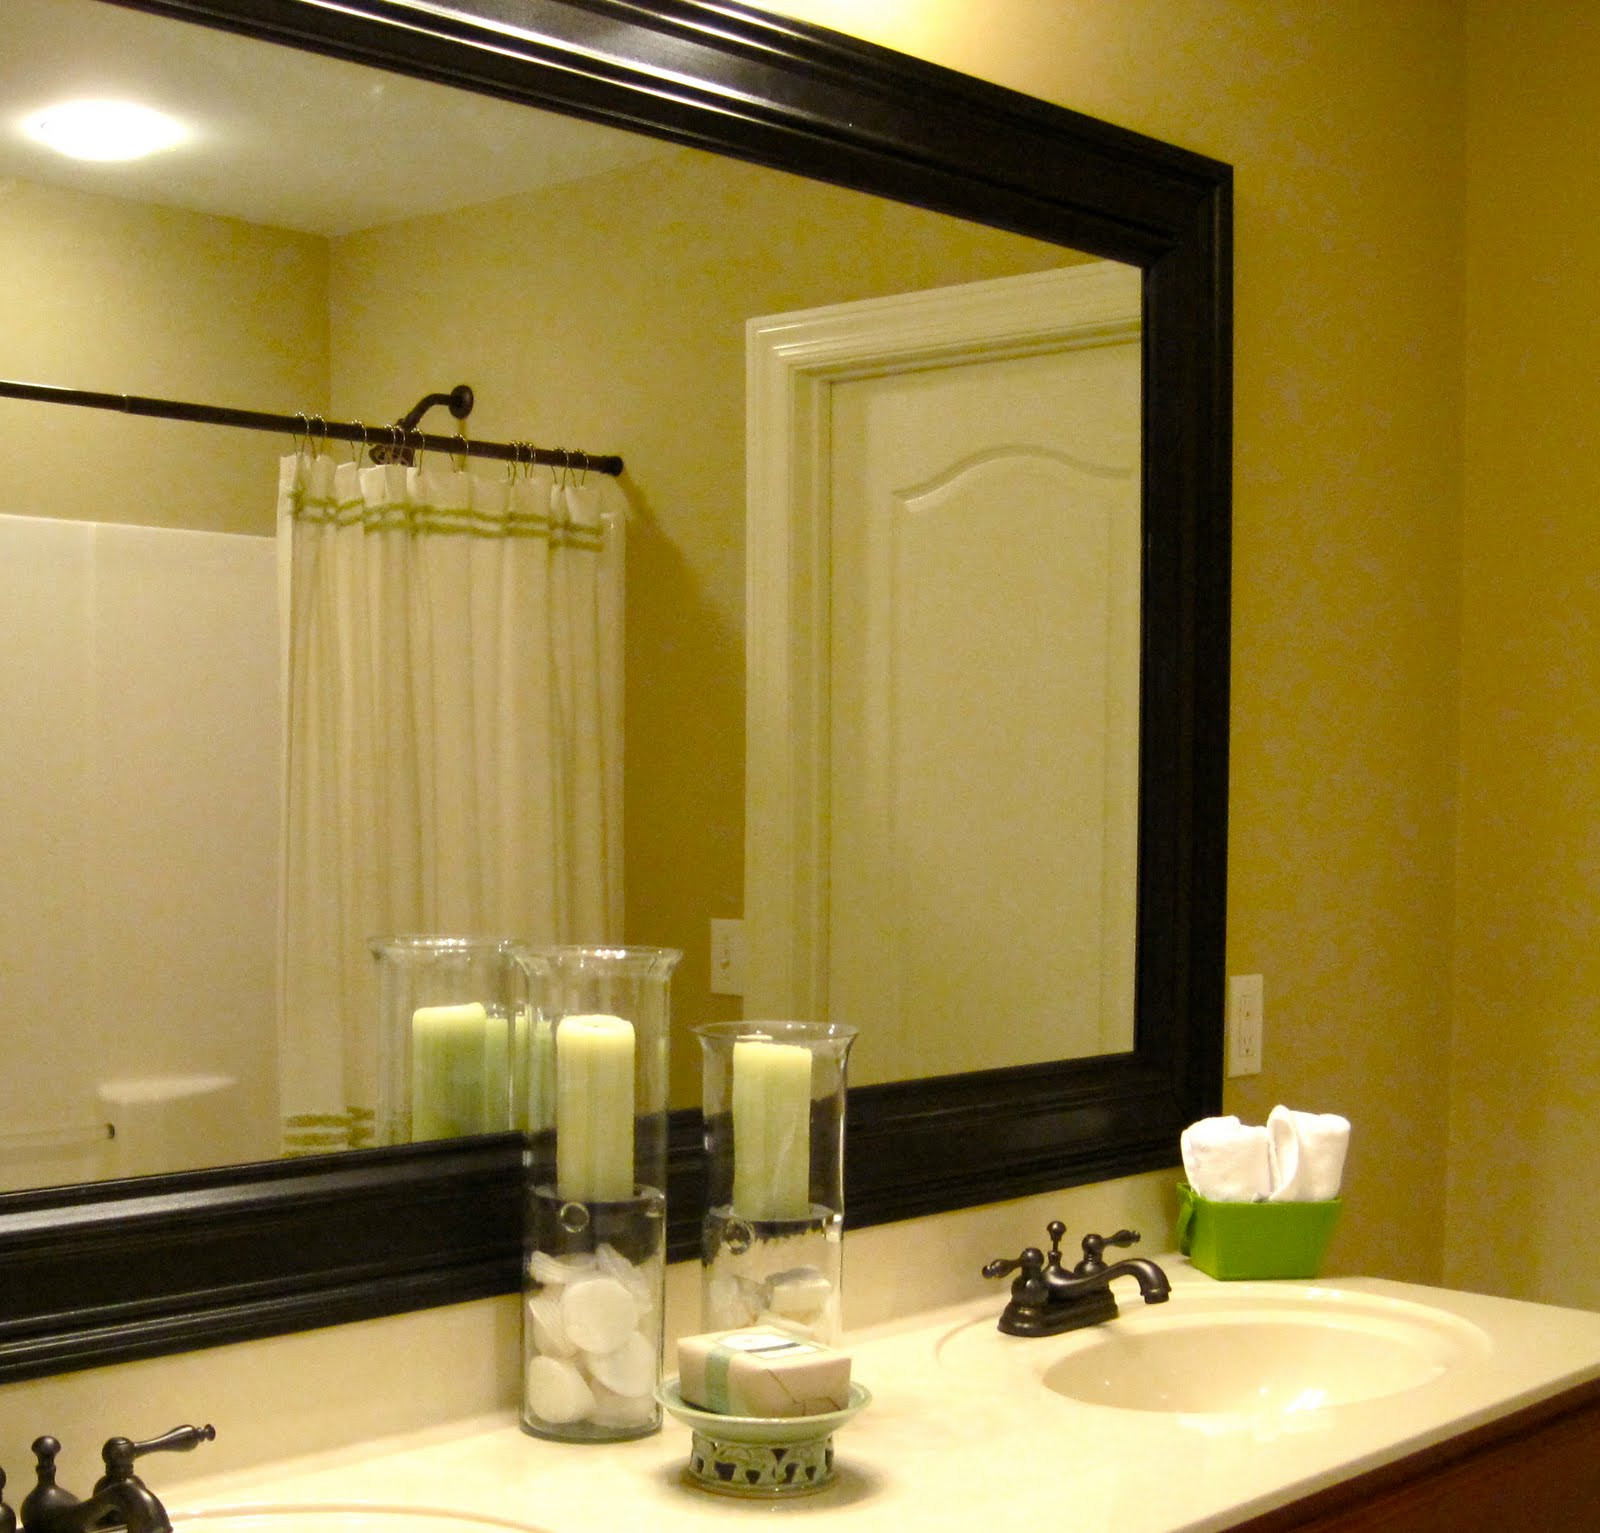 Framed Mirror In Bathroom
 corecoloro and the imaginings Bathroom Mirror Frame